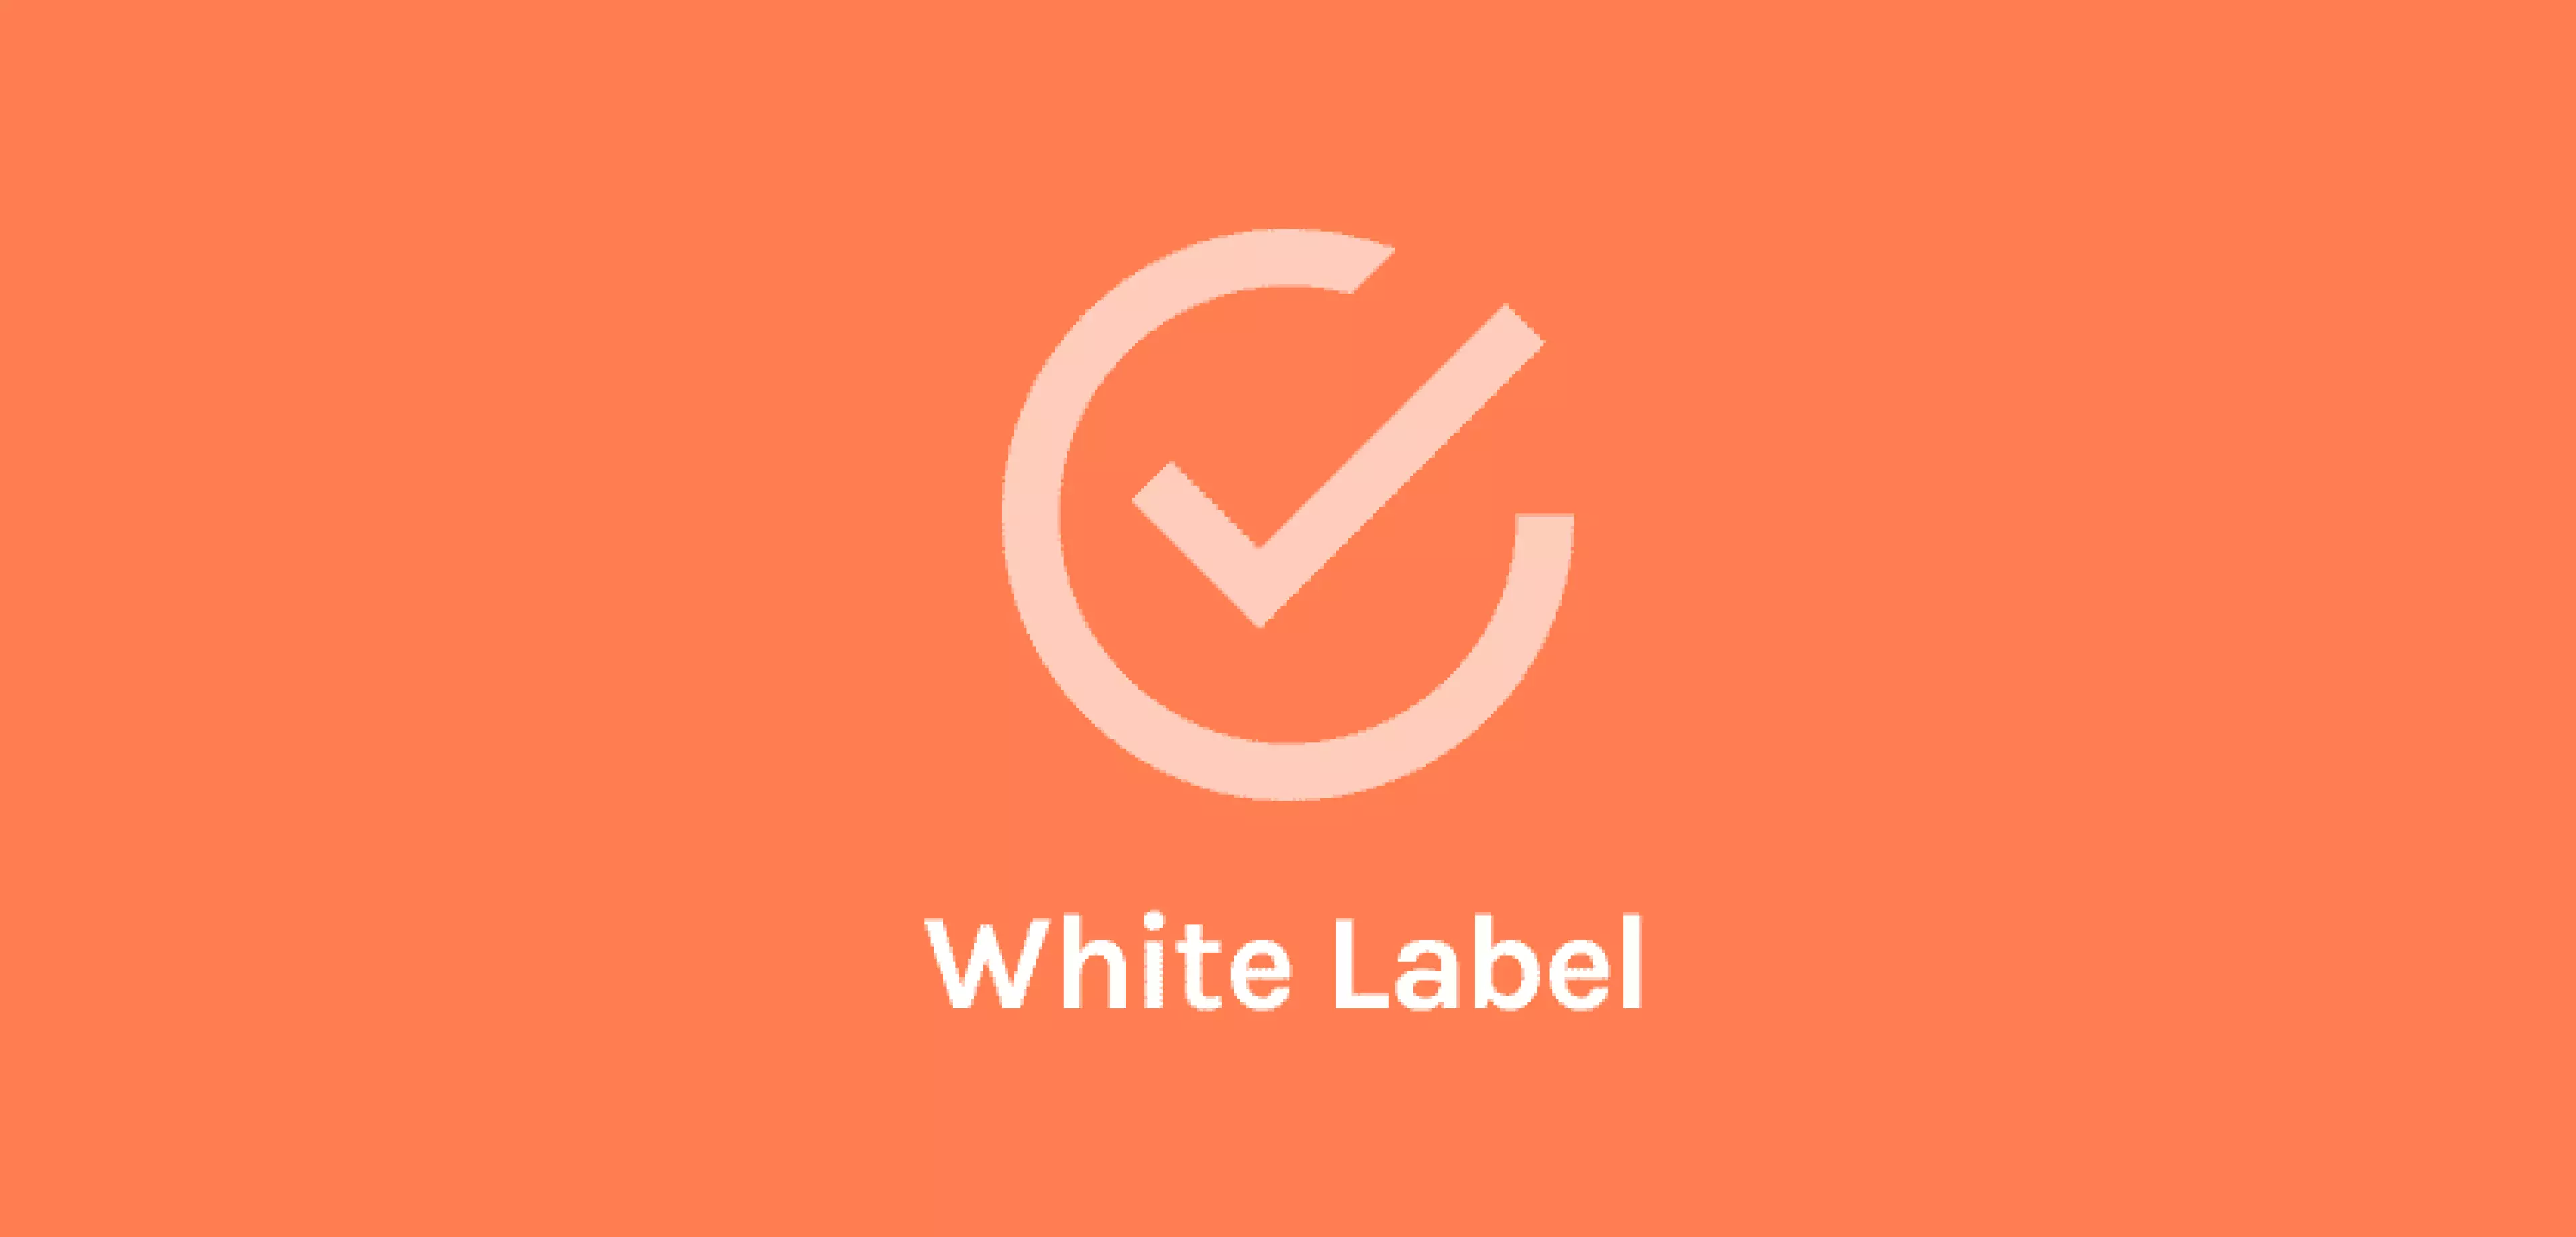 Oceanwp - White Label